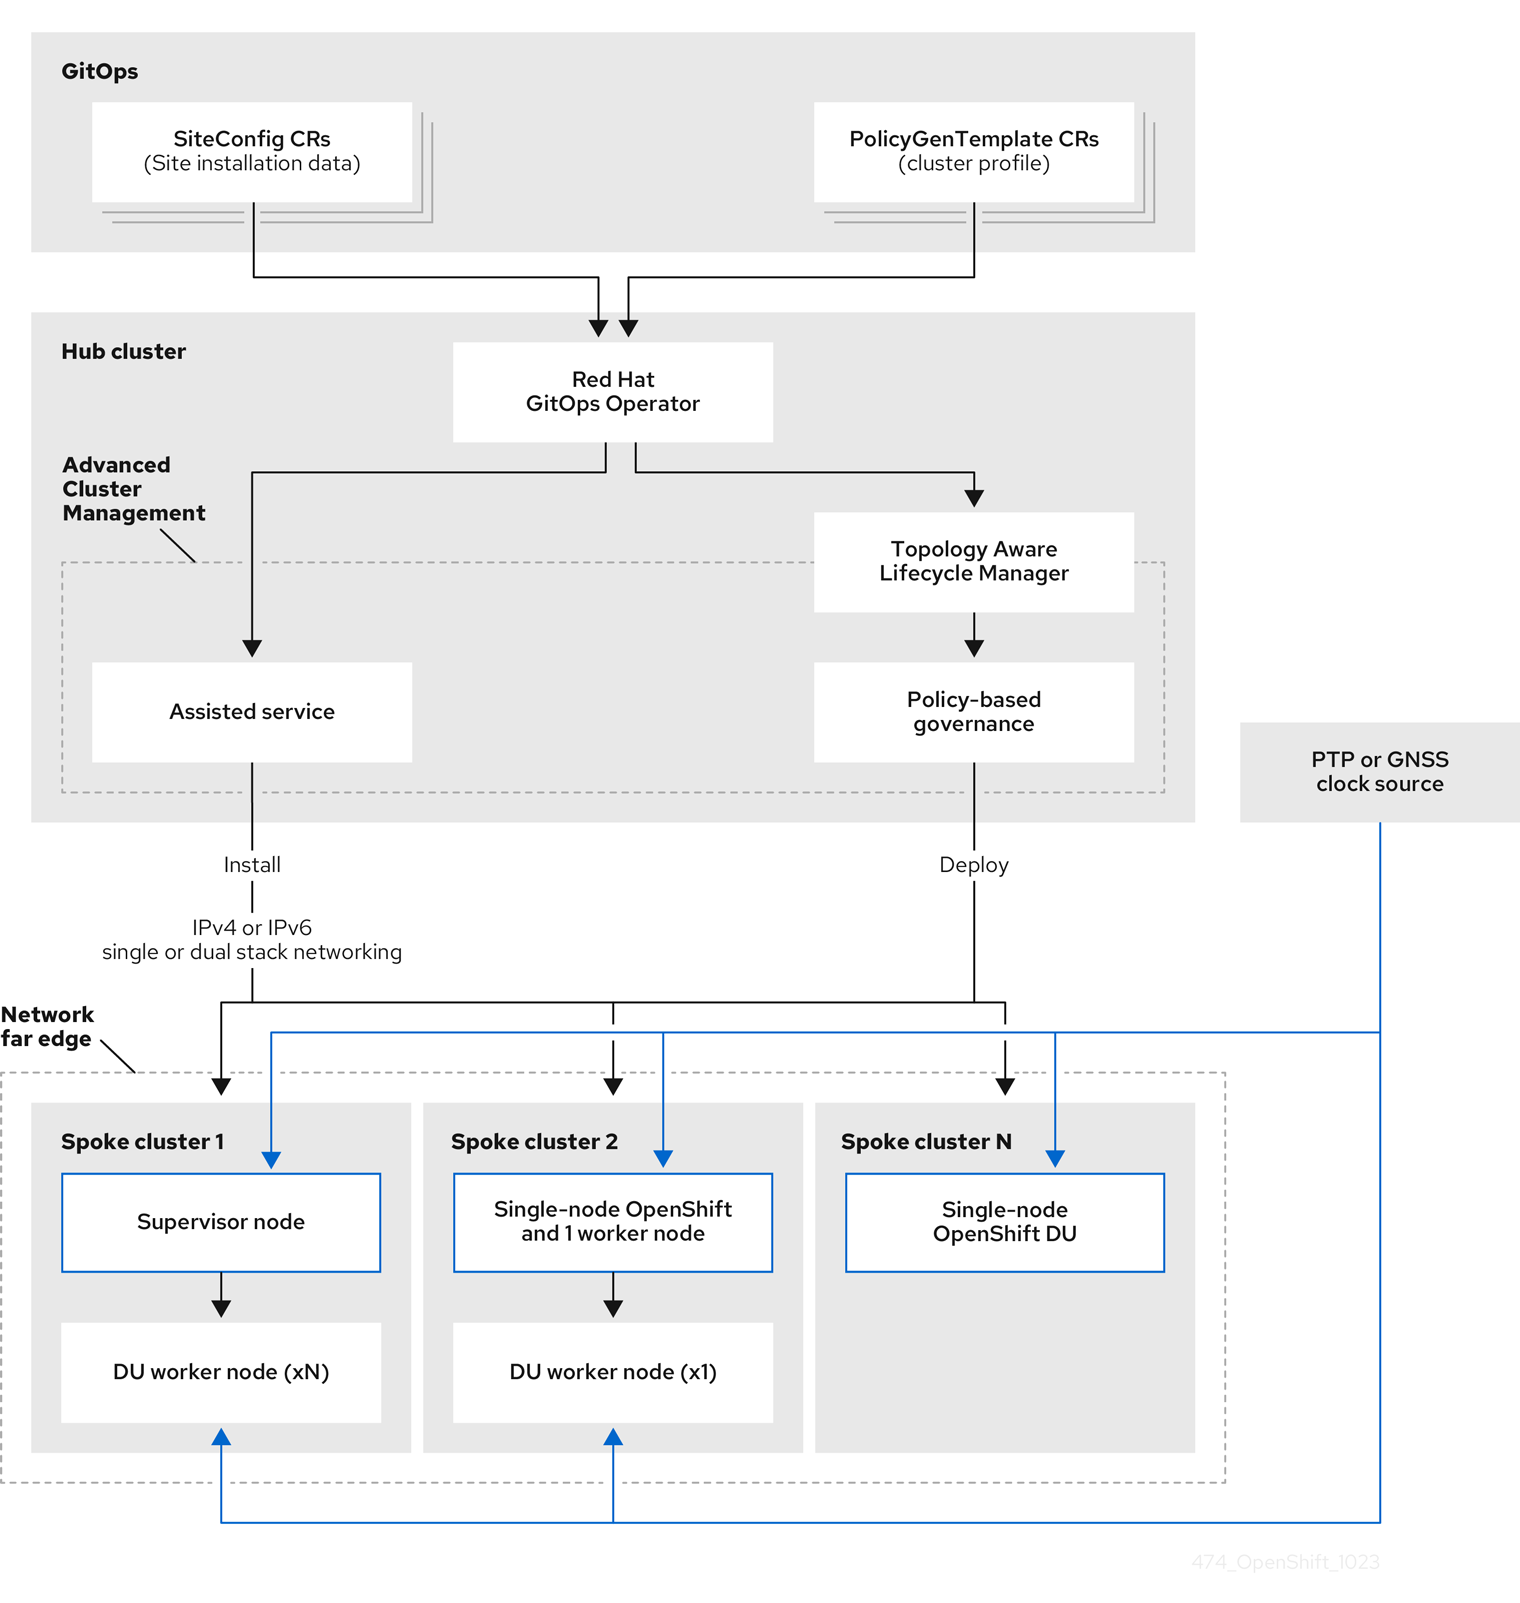 A diagram showing two distinctive network far edge deployment processes